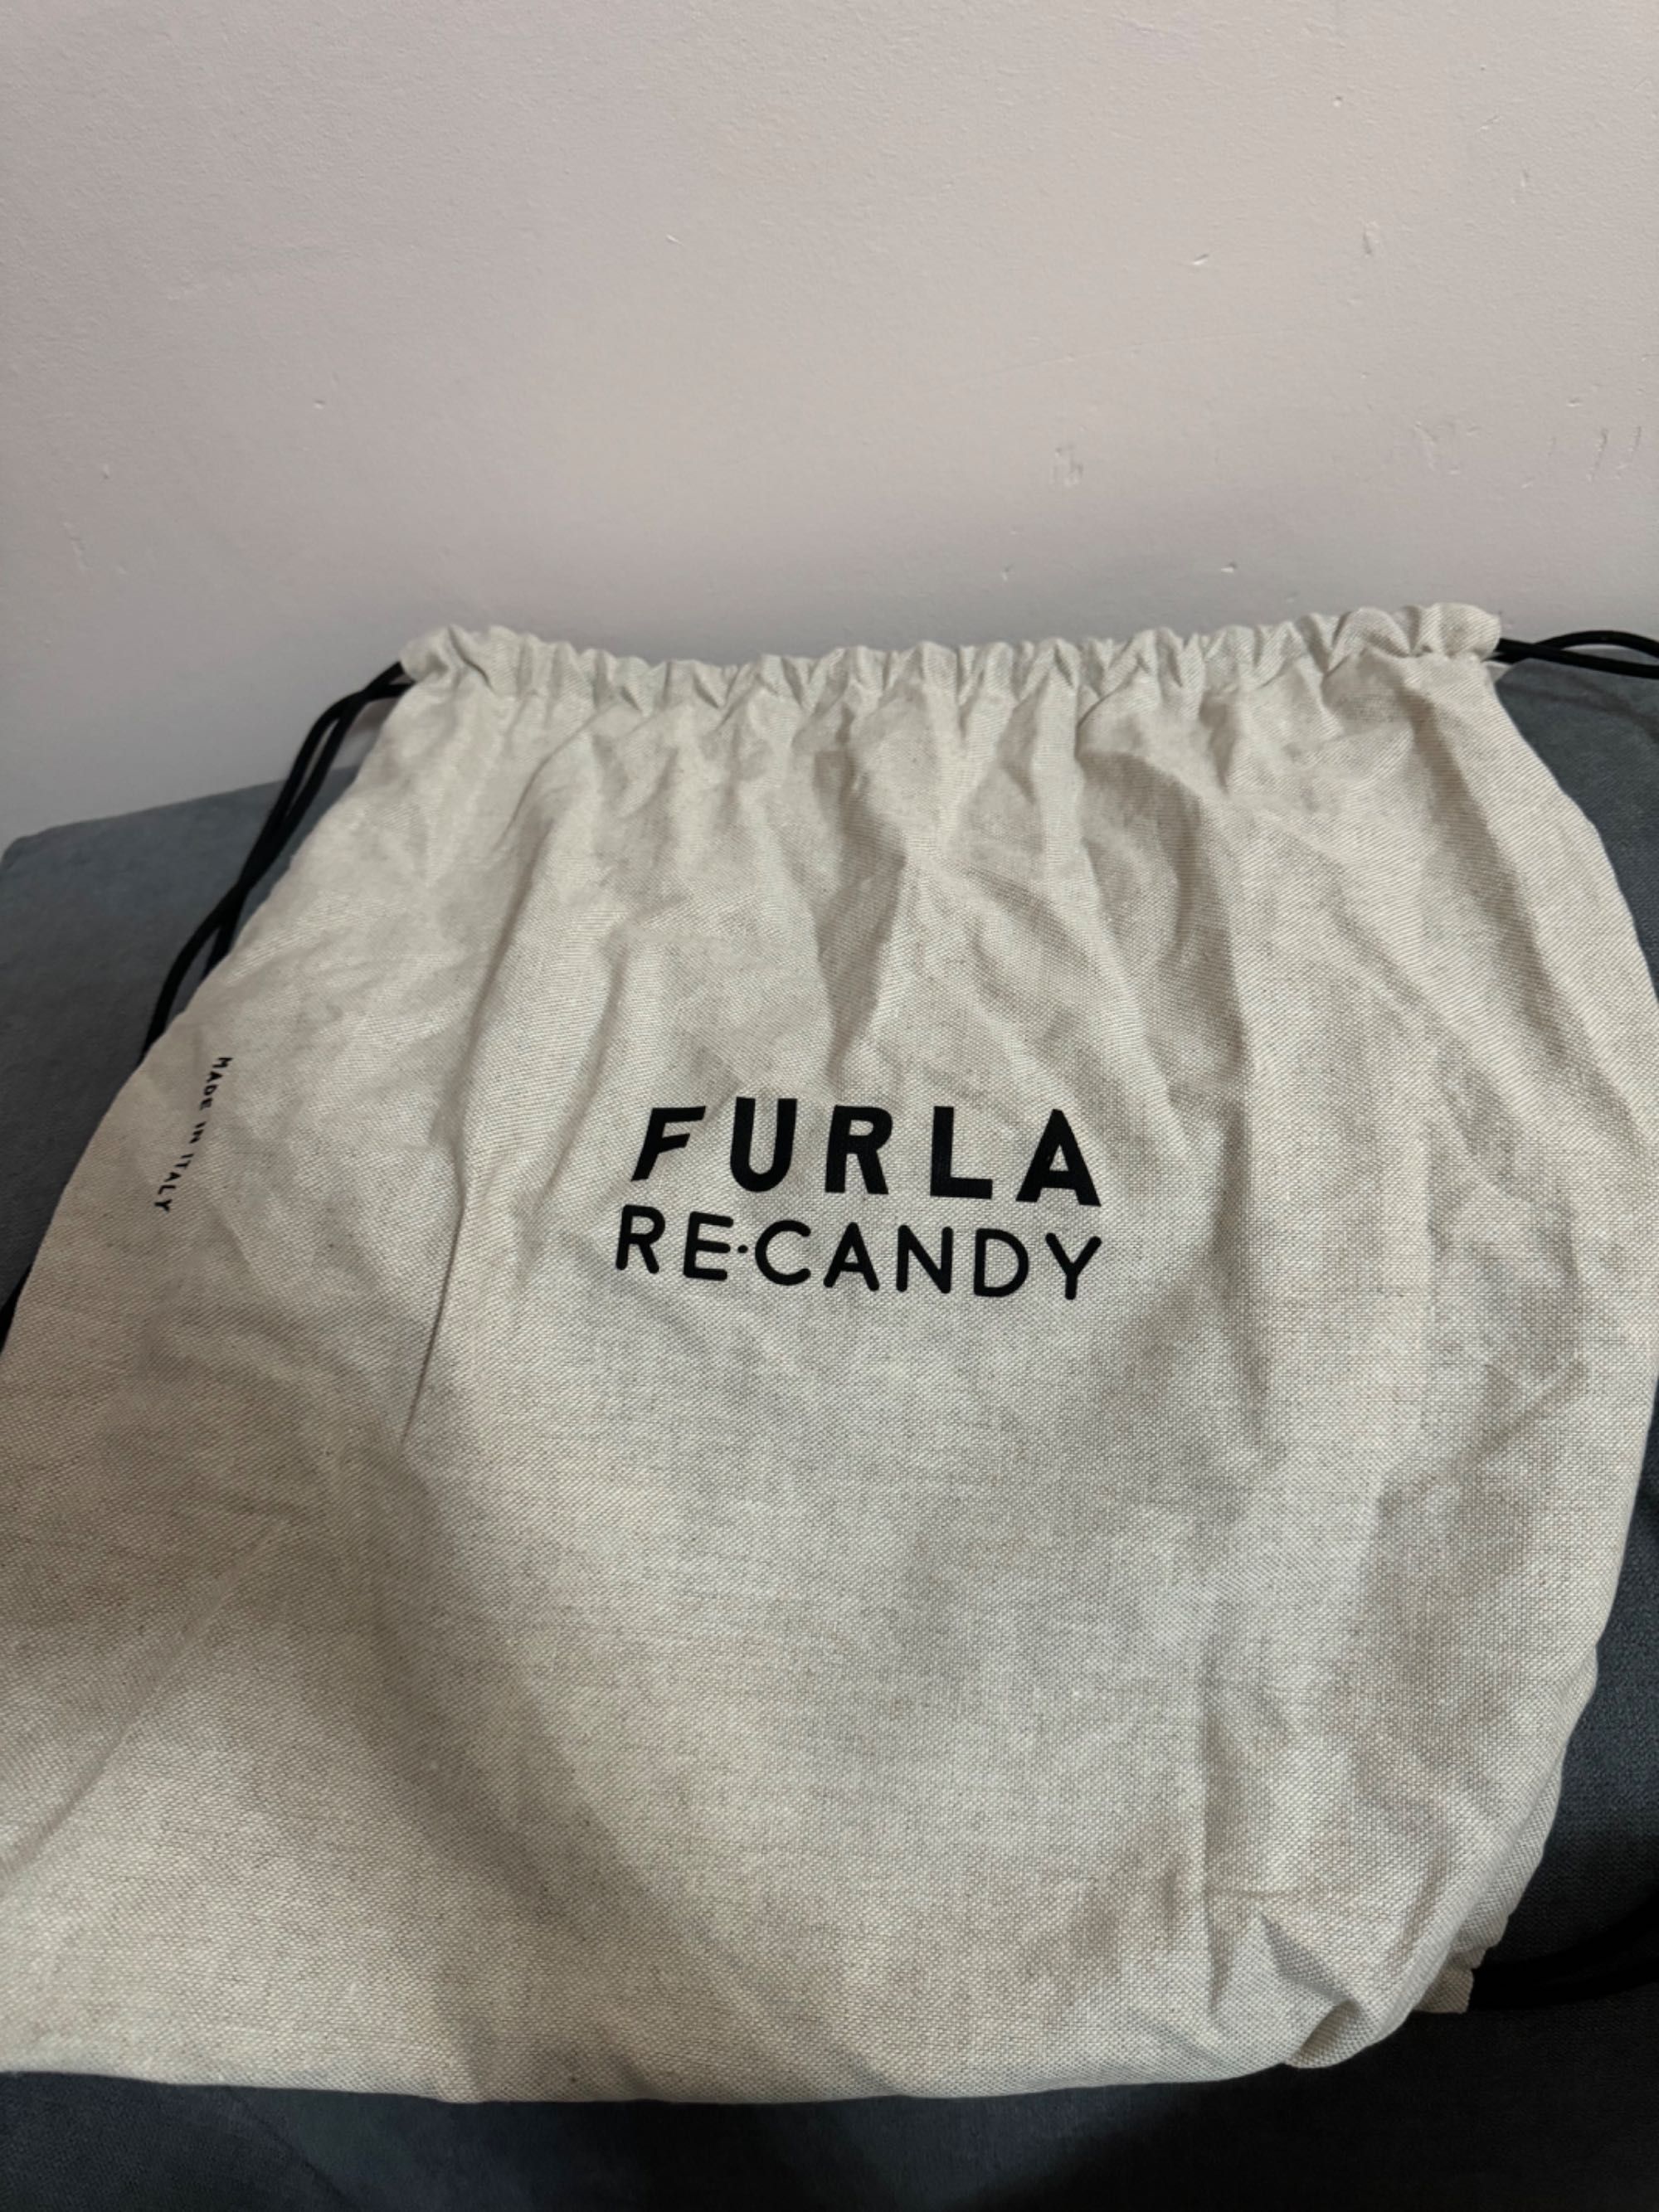 Дамска чанта Furla re candy